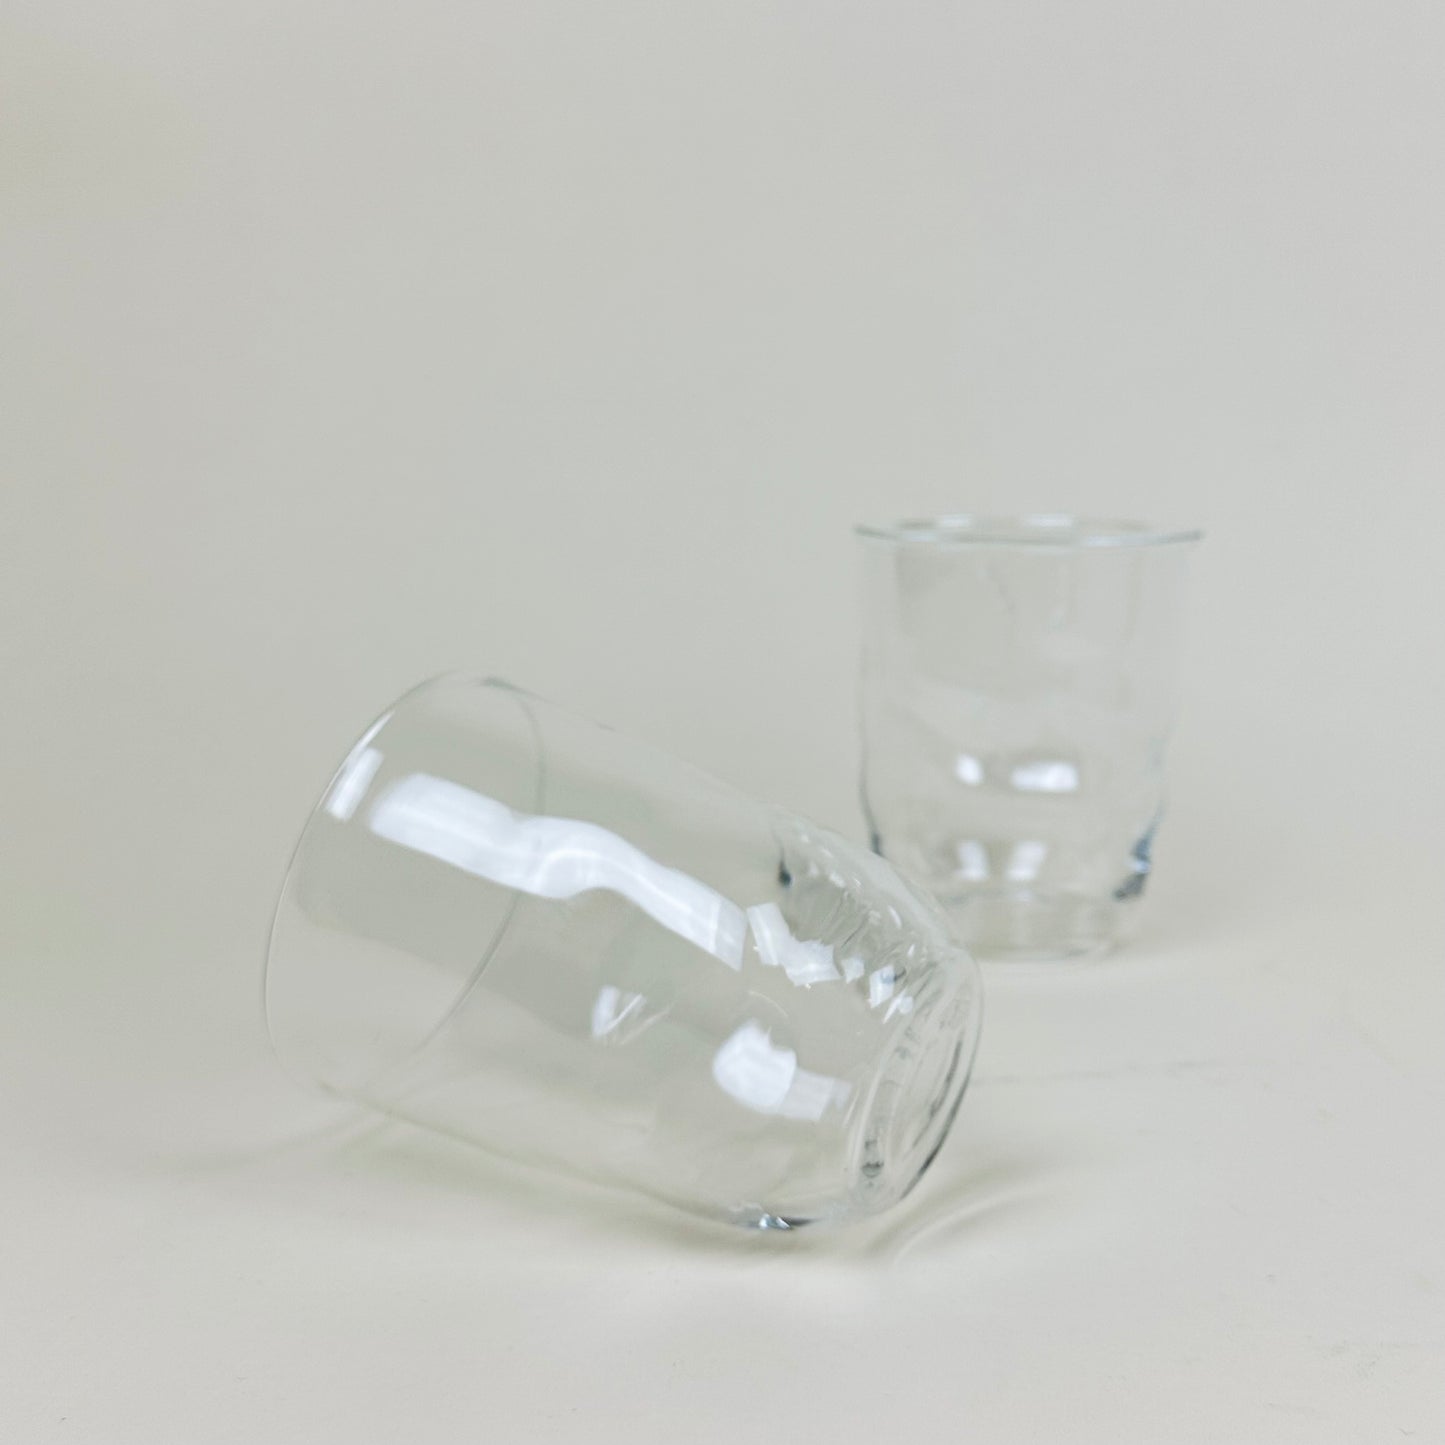 Glass by Silje Lindrup